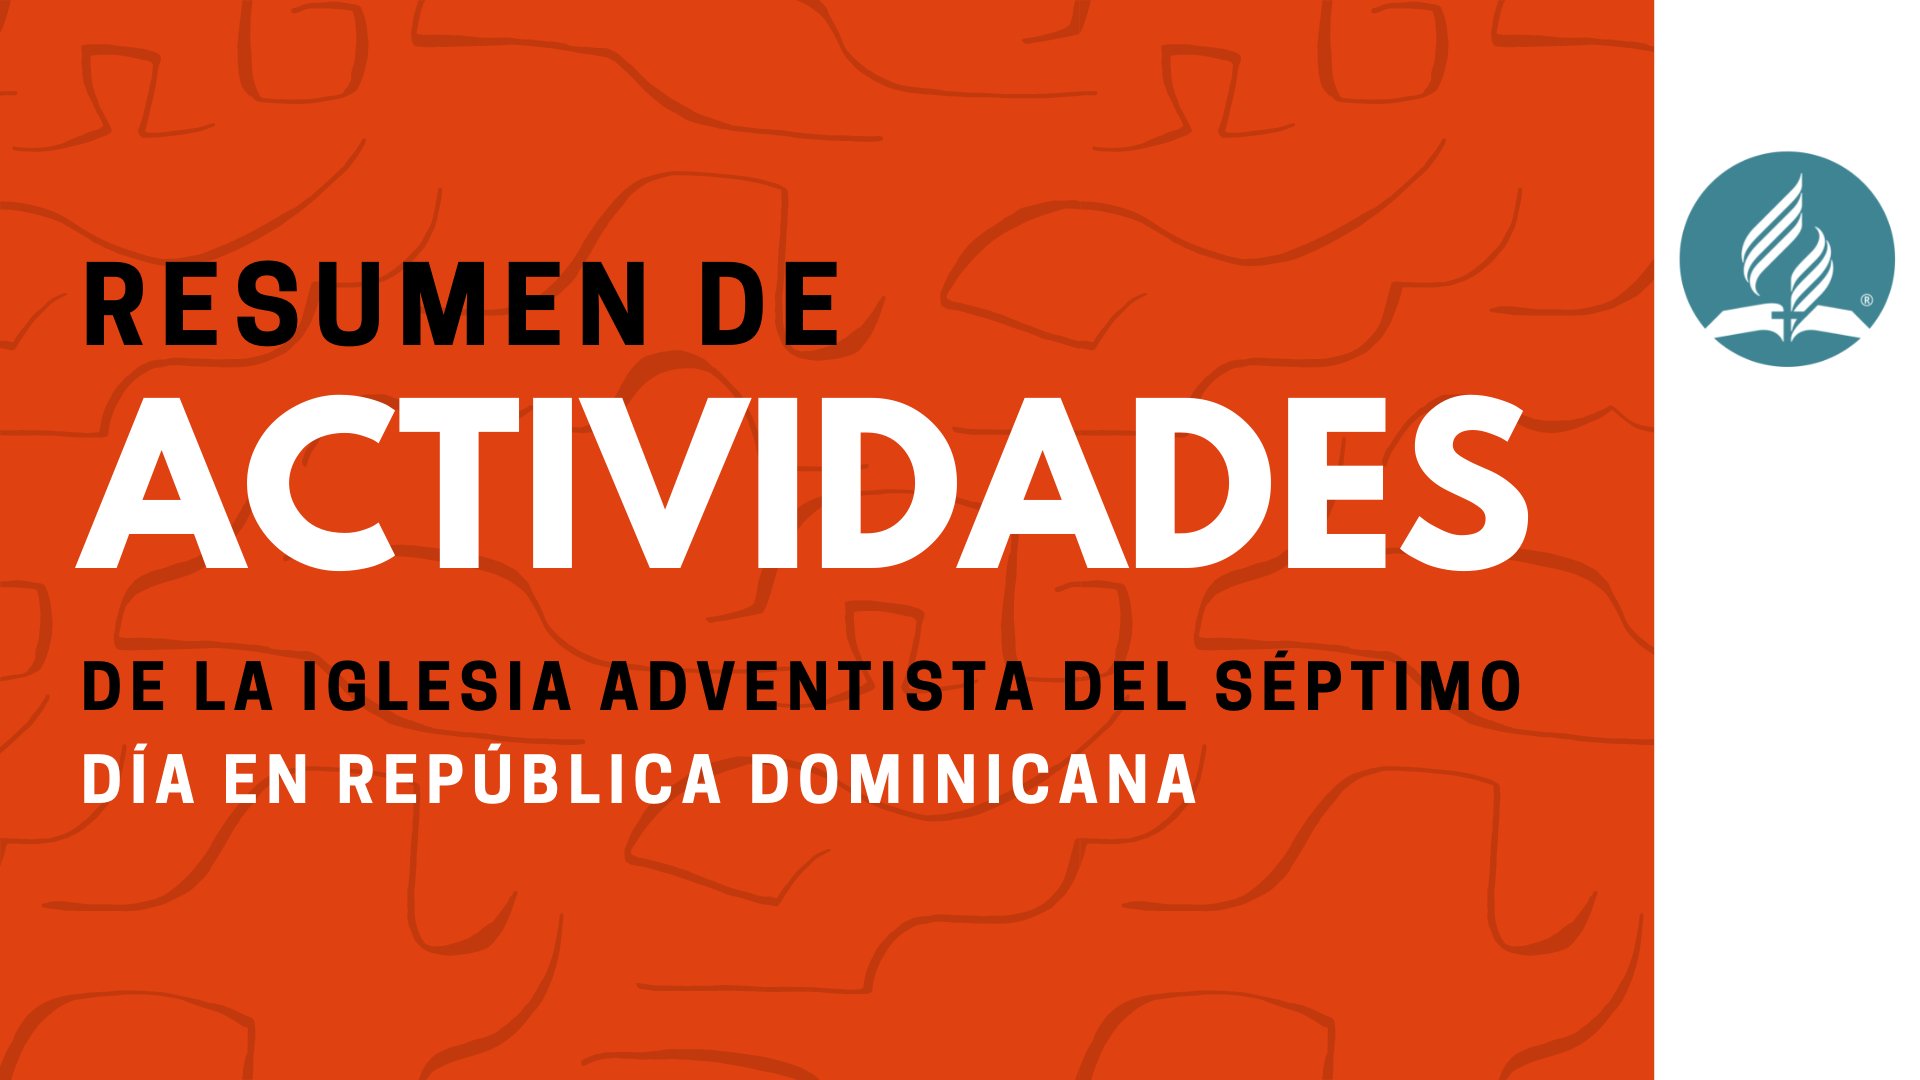 Iglesia Adventista del 7mo Día Central Santiago RD on Twitter: 